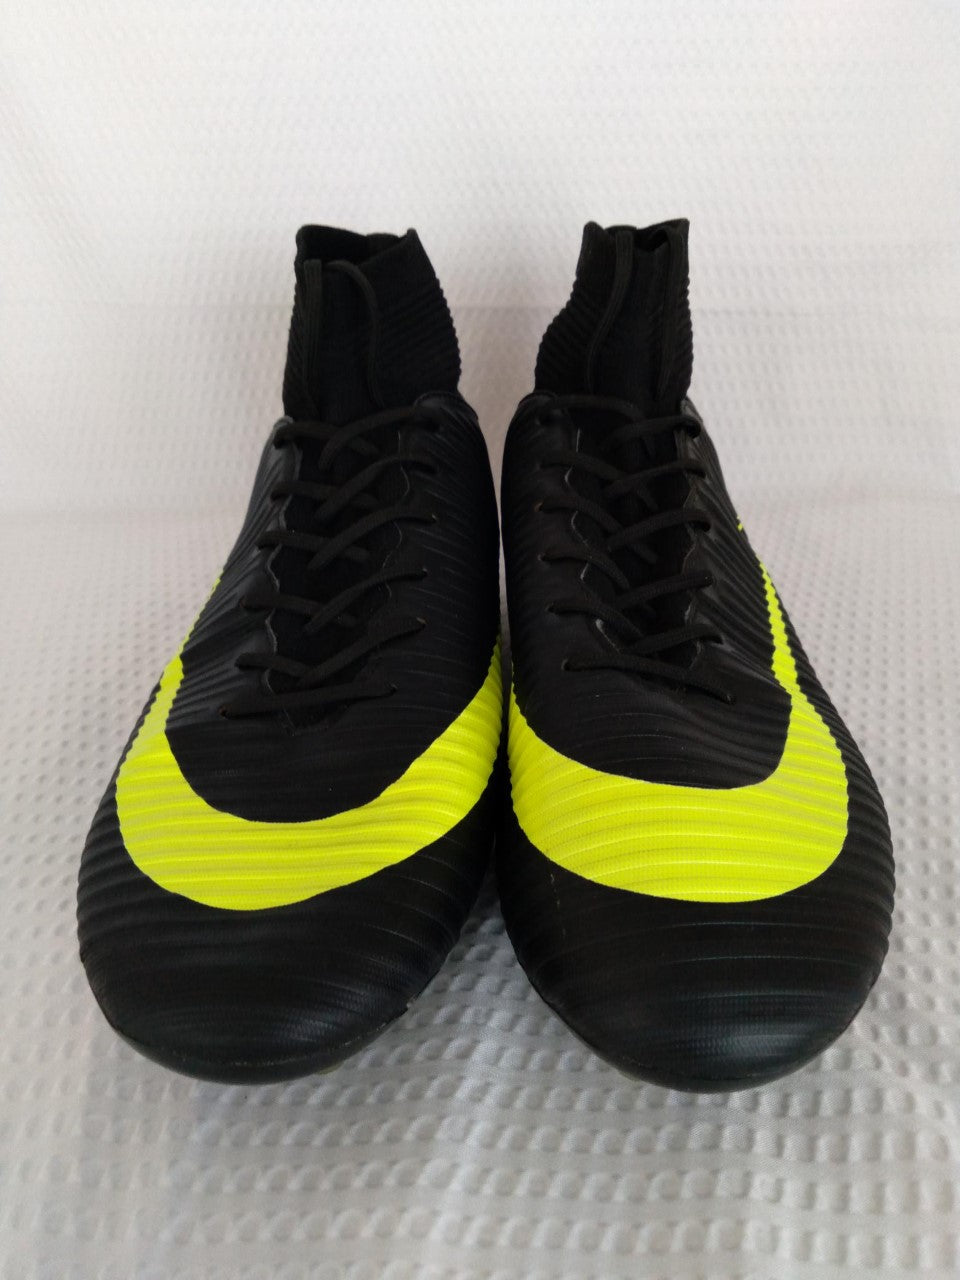 Binbinniao Football Shoes - Size 11